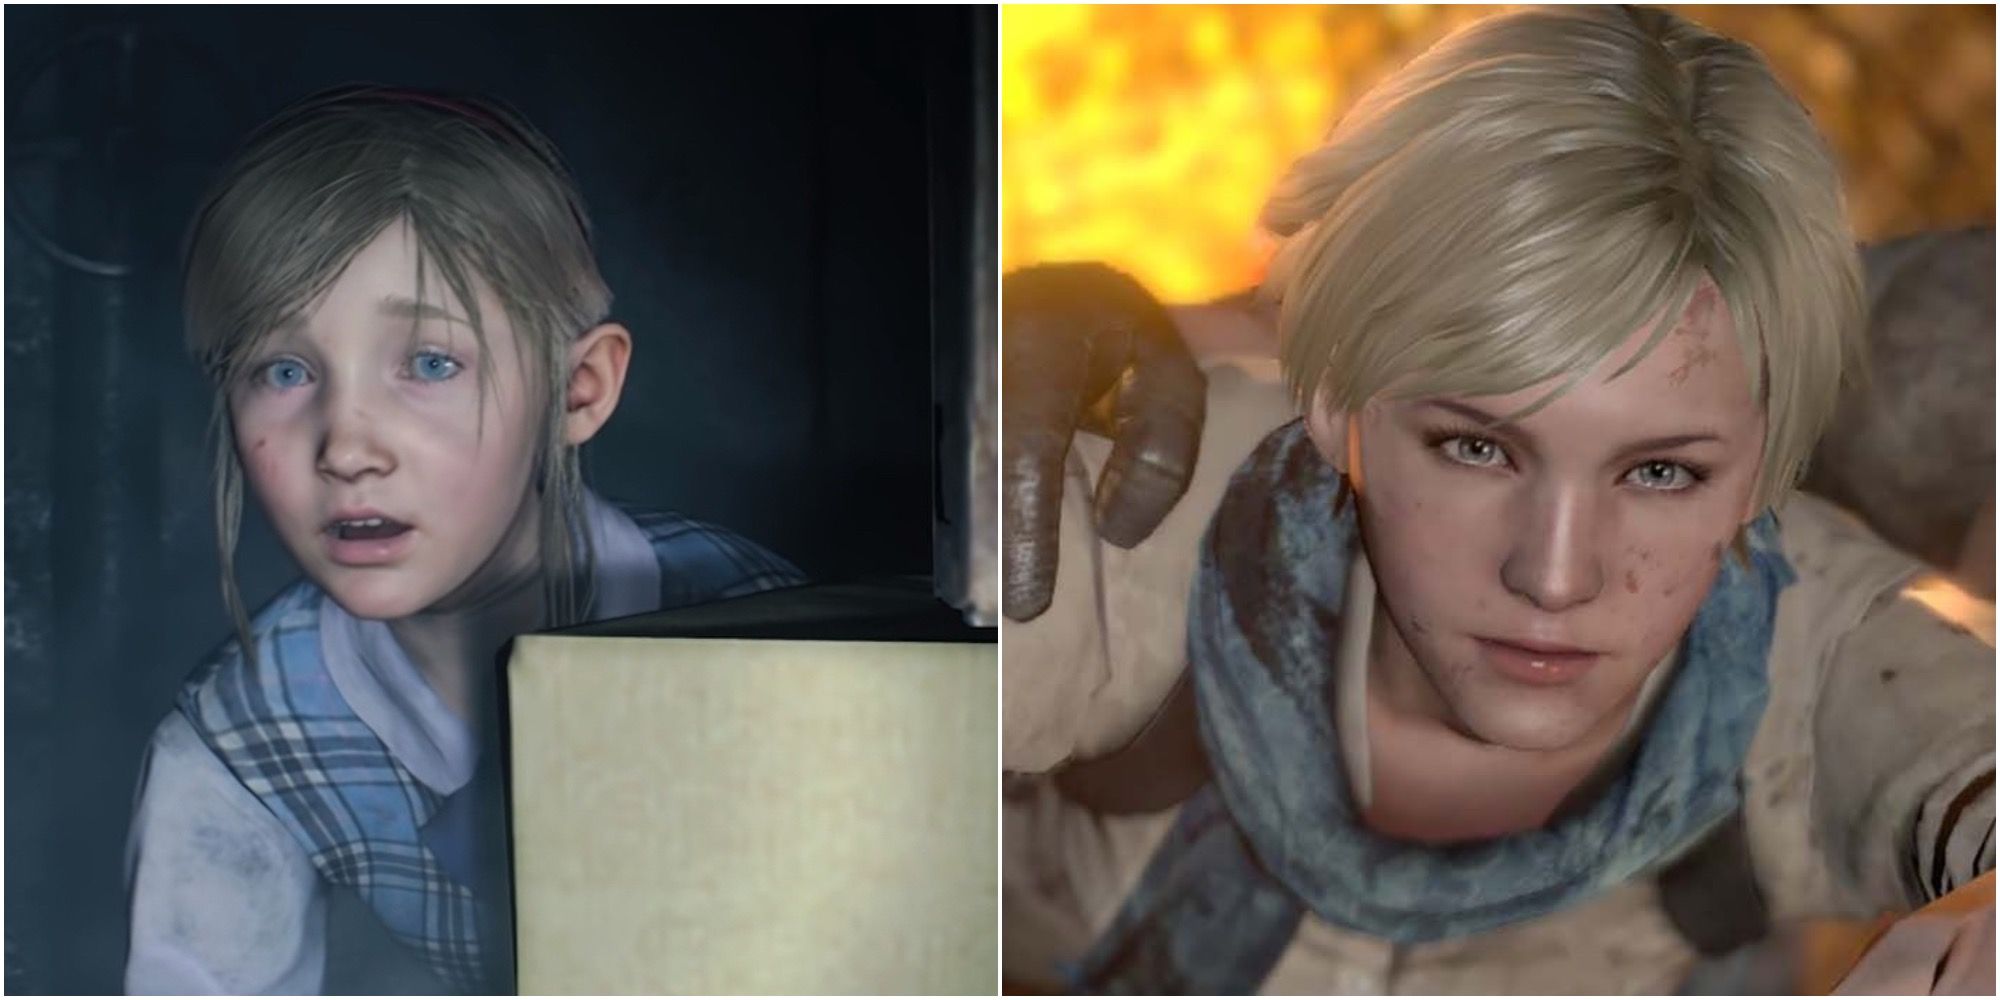 Sherry Birkin in Resident Evil 2 as an adult vs. Resident Evil 6 as an adult split image